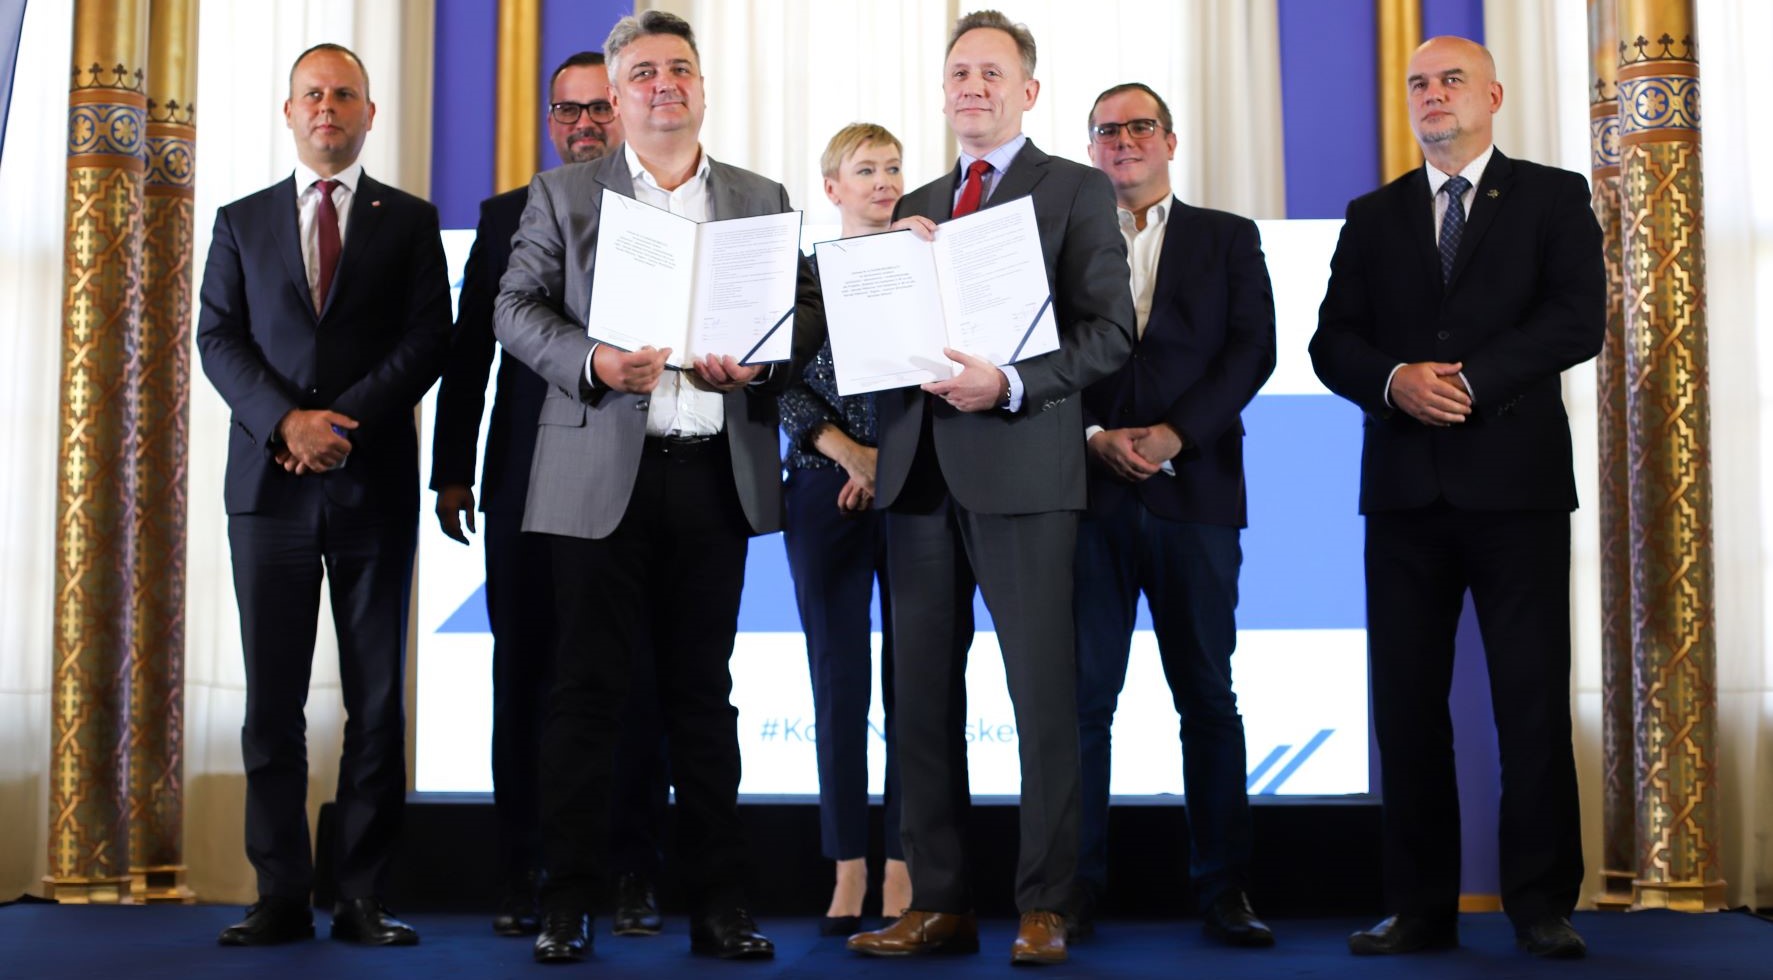 Podpisanie umowy na prace Multiconsult Polska dla Centralnego Portu Komunikacyjnego